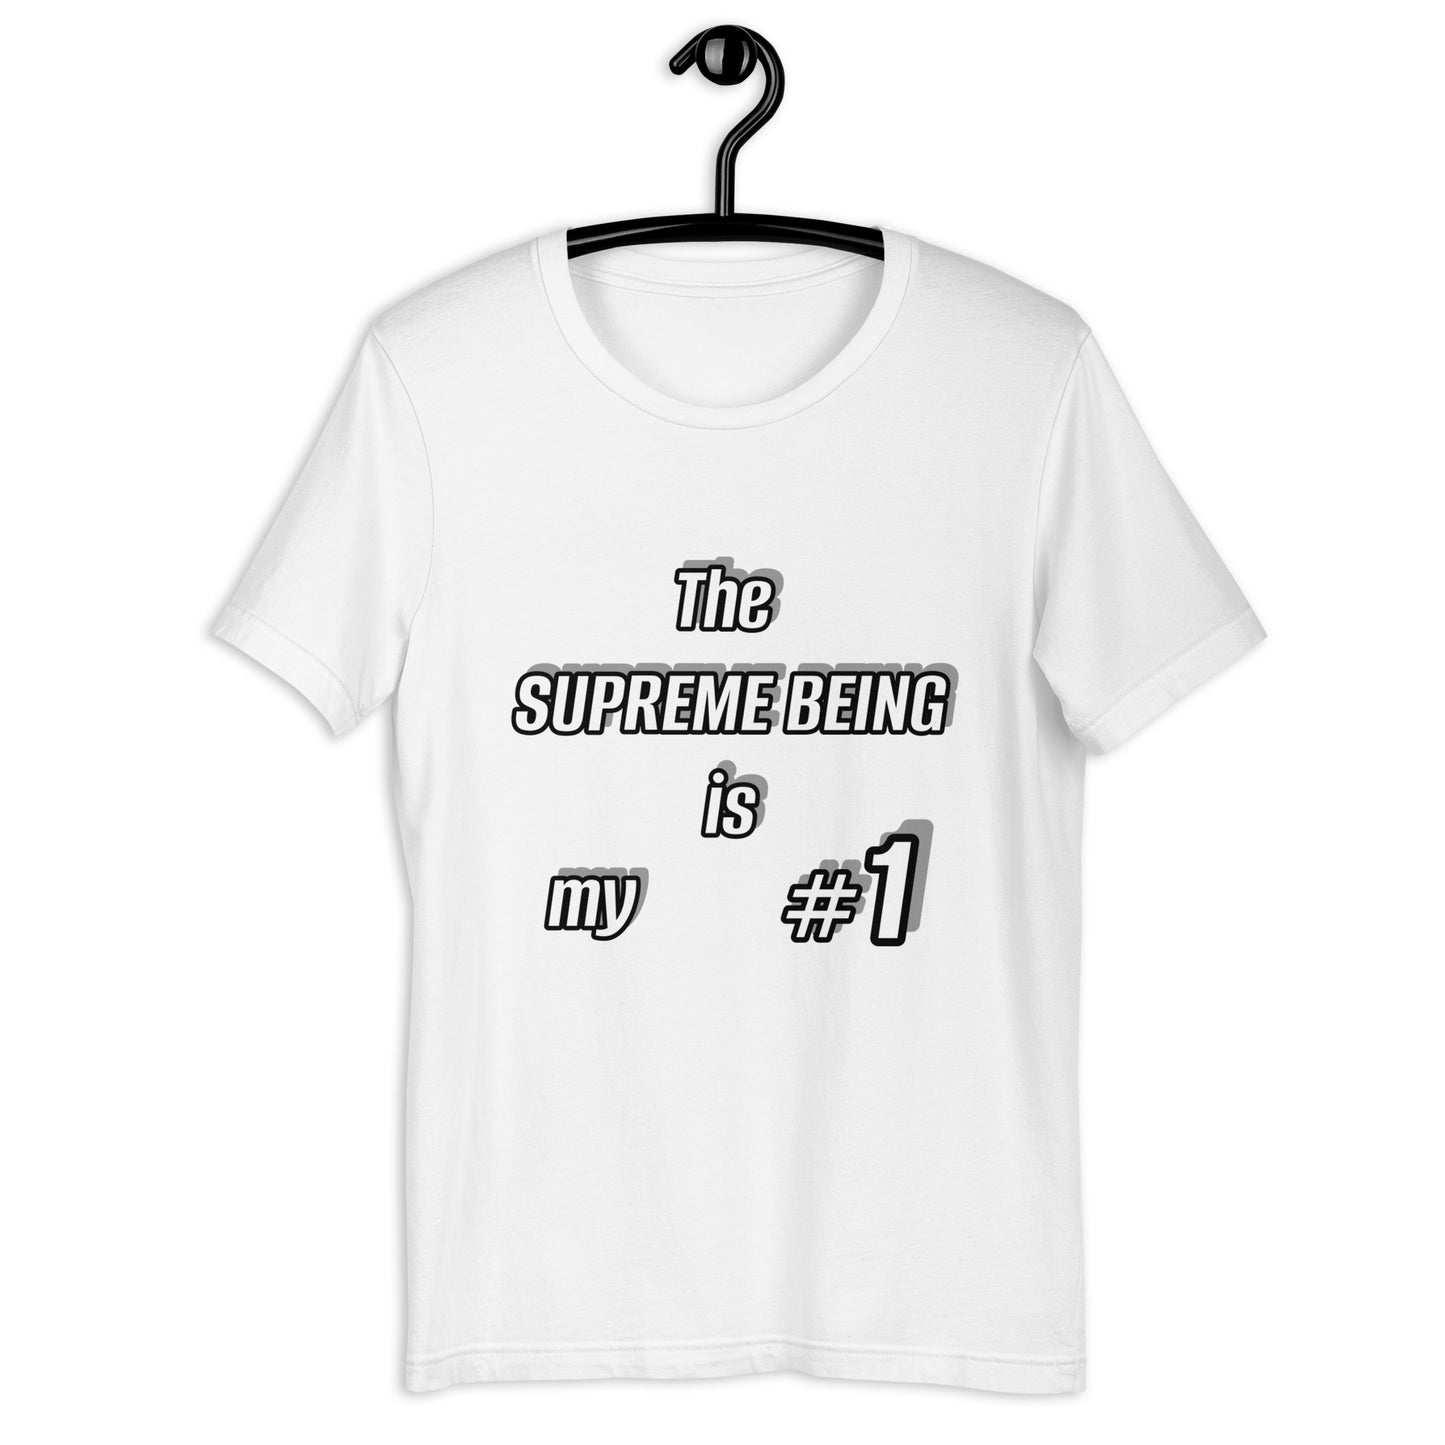 Supreme Being T-shirt CUSTOM MADE